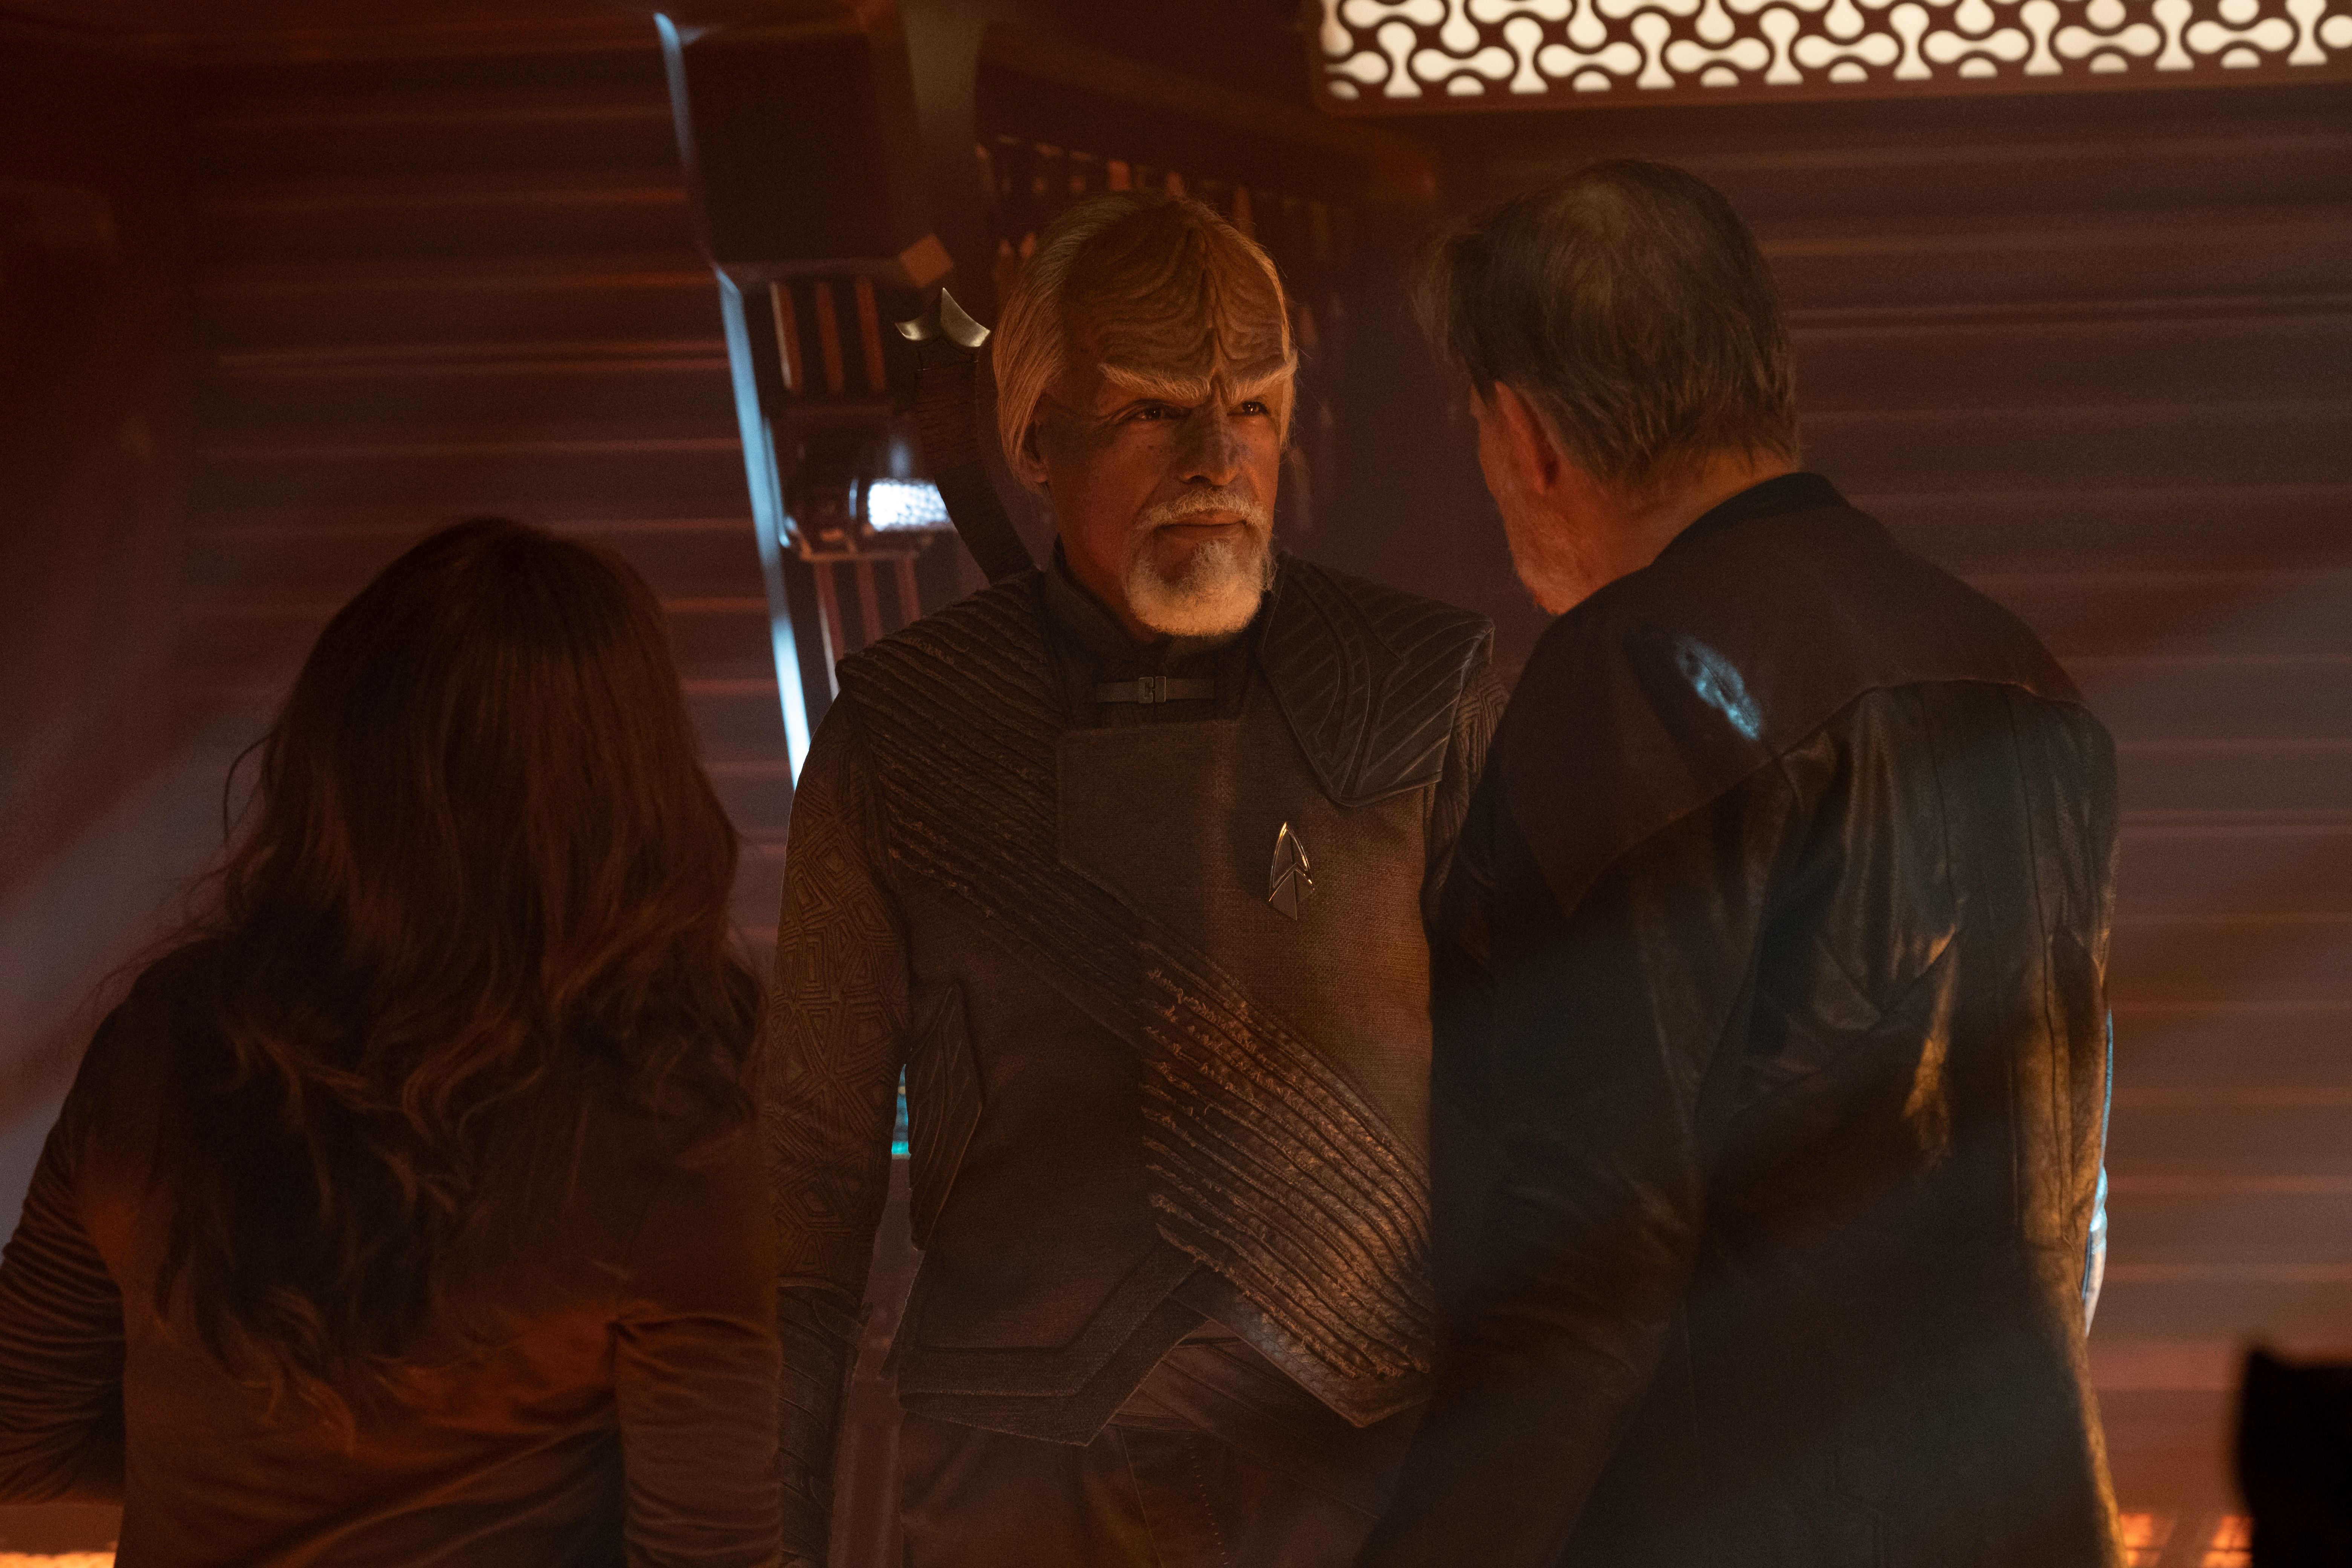 Michael Dorn as Worf Marina Sirtis as Deanna Troi and Jonathan Frakes as Will Riker in Star Trek Picard Season 3 Episode 8